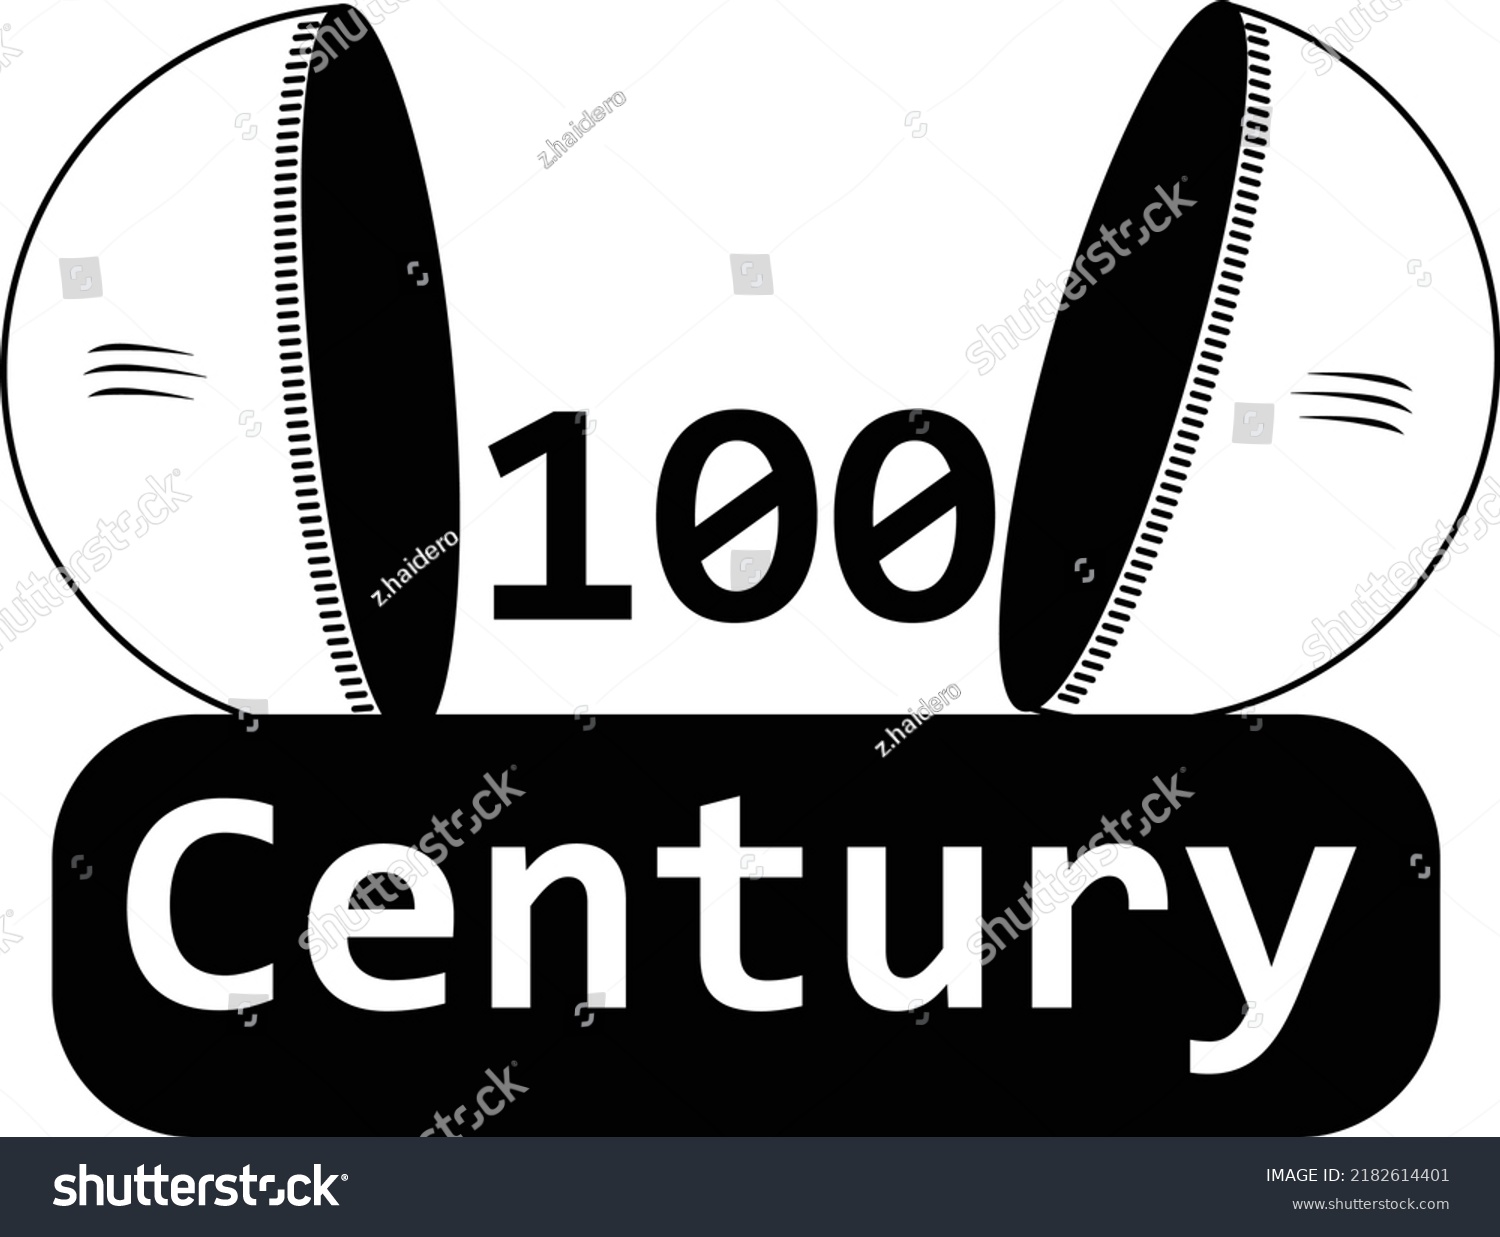 SVG of Century by the batsmen in cricket svg